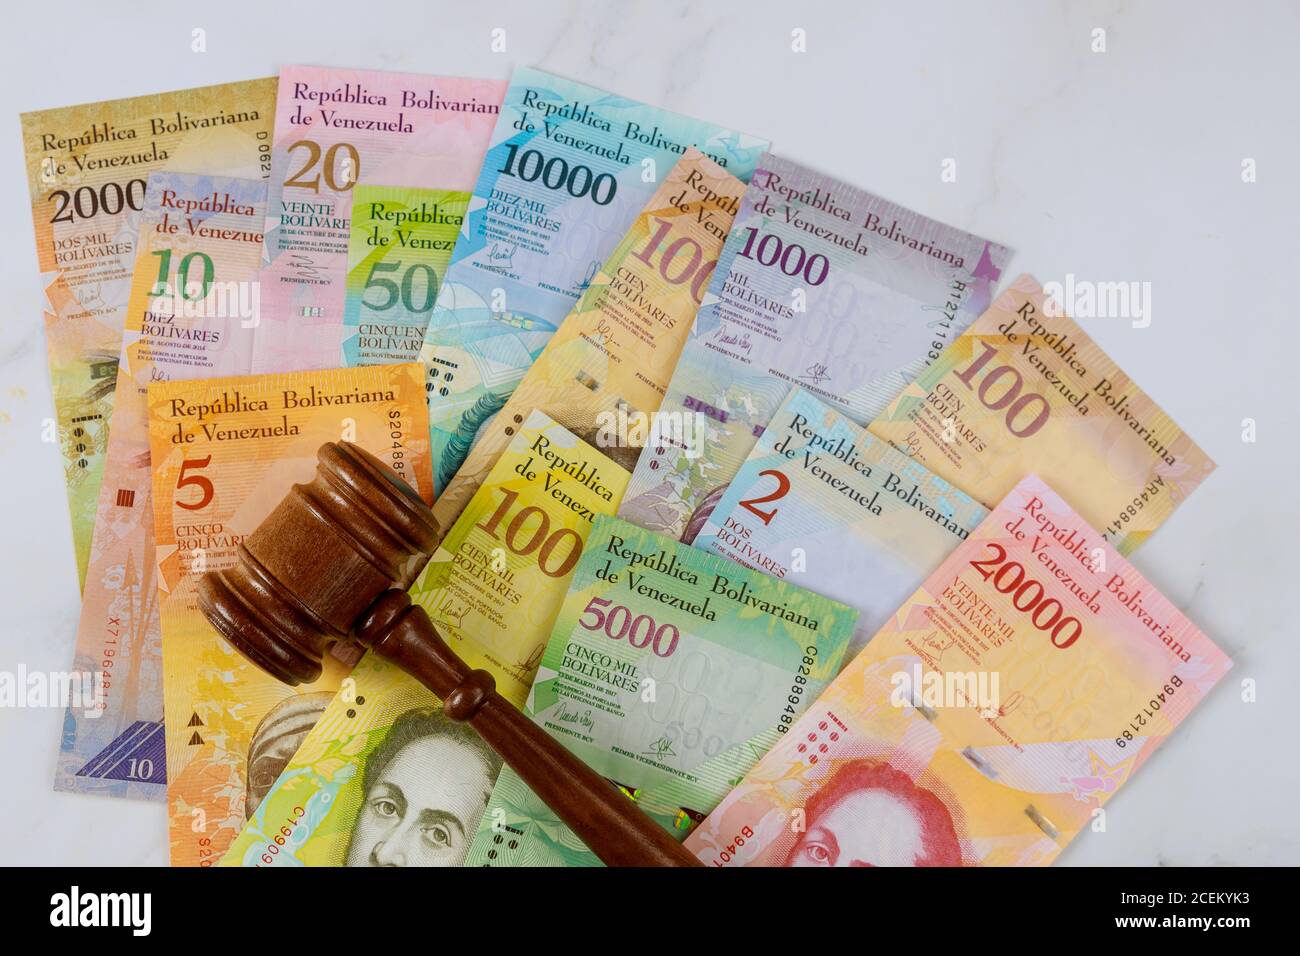 Jueces ley de billetes Bolivar Venezolano con diferentes billetes de papel moneda. Foto de stock